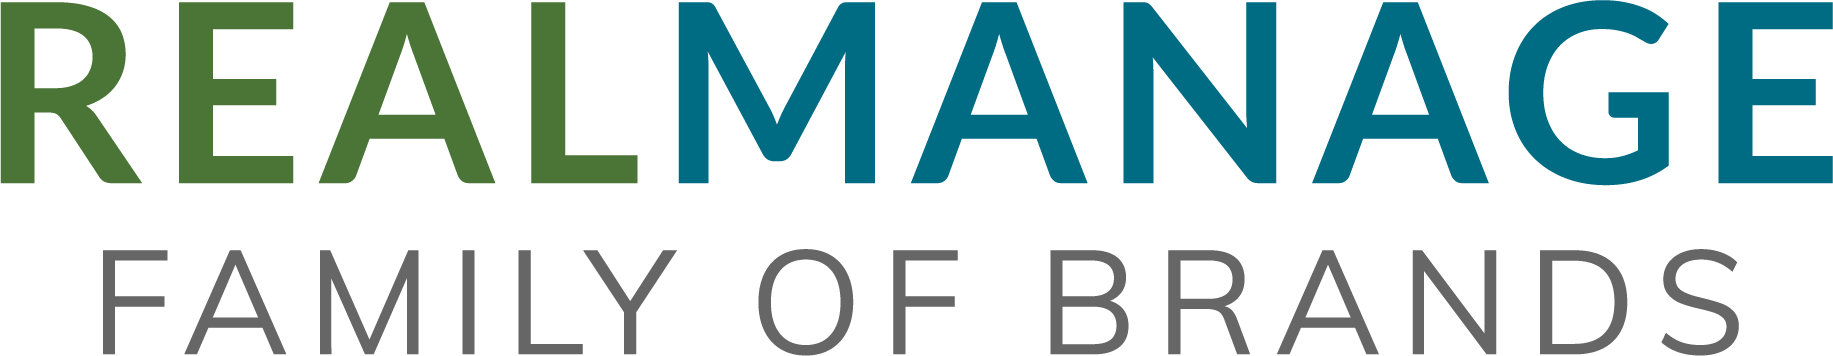 RealManage Family of Brands - SEFL logo